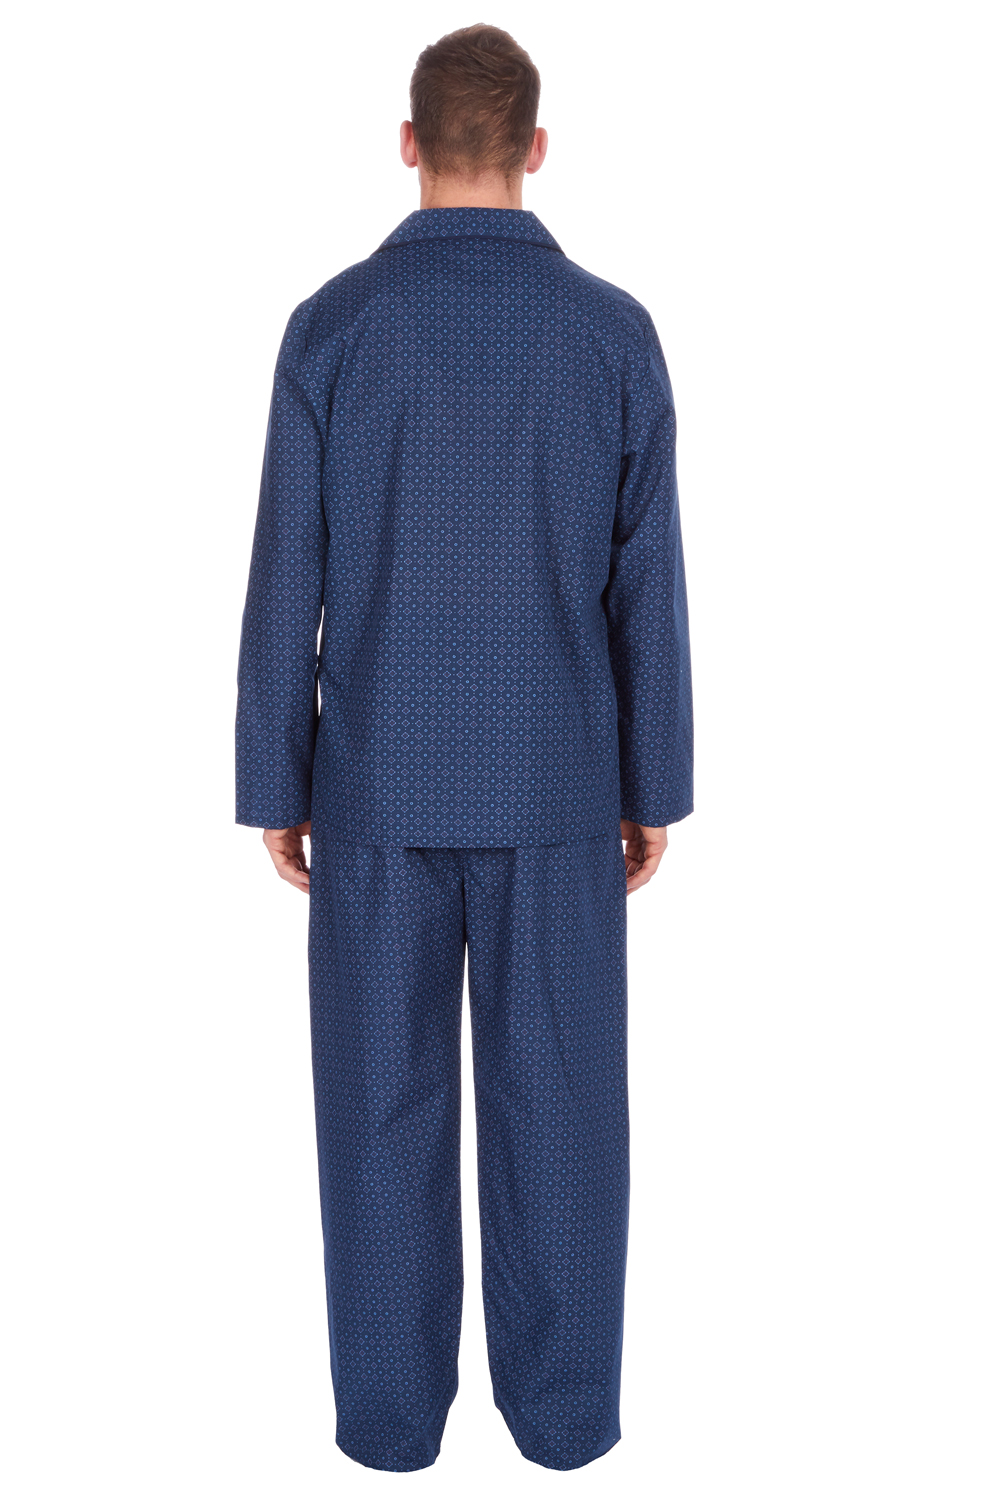 Cargo Bay Mens Classic Poplin Long Sleeve Pyjama Set Top & Bottom ...